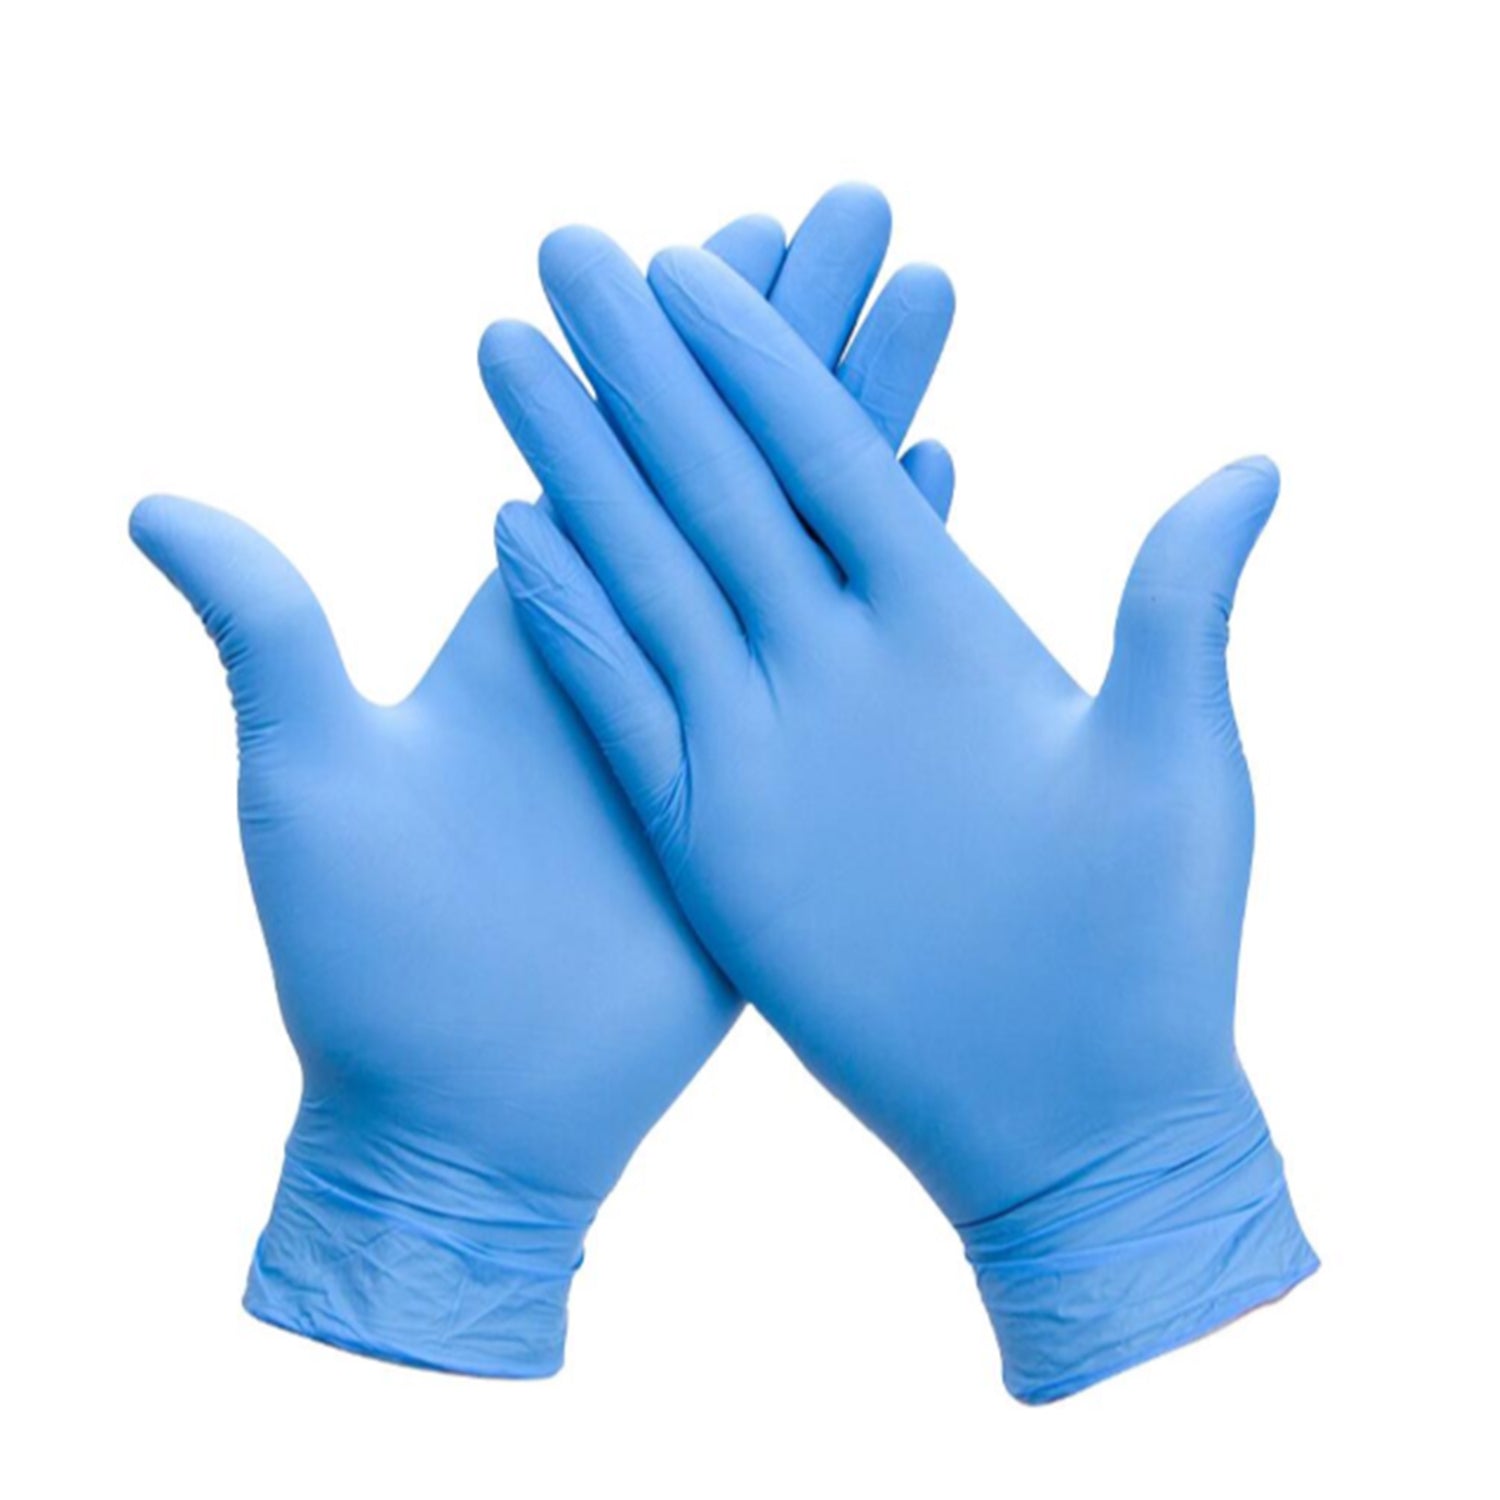 Premier AF Nitrile Examination Gloves | Sterile | Latex Free | Medium | Pack of 50 Pairs